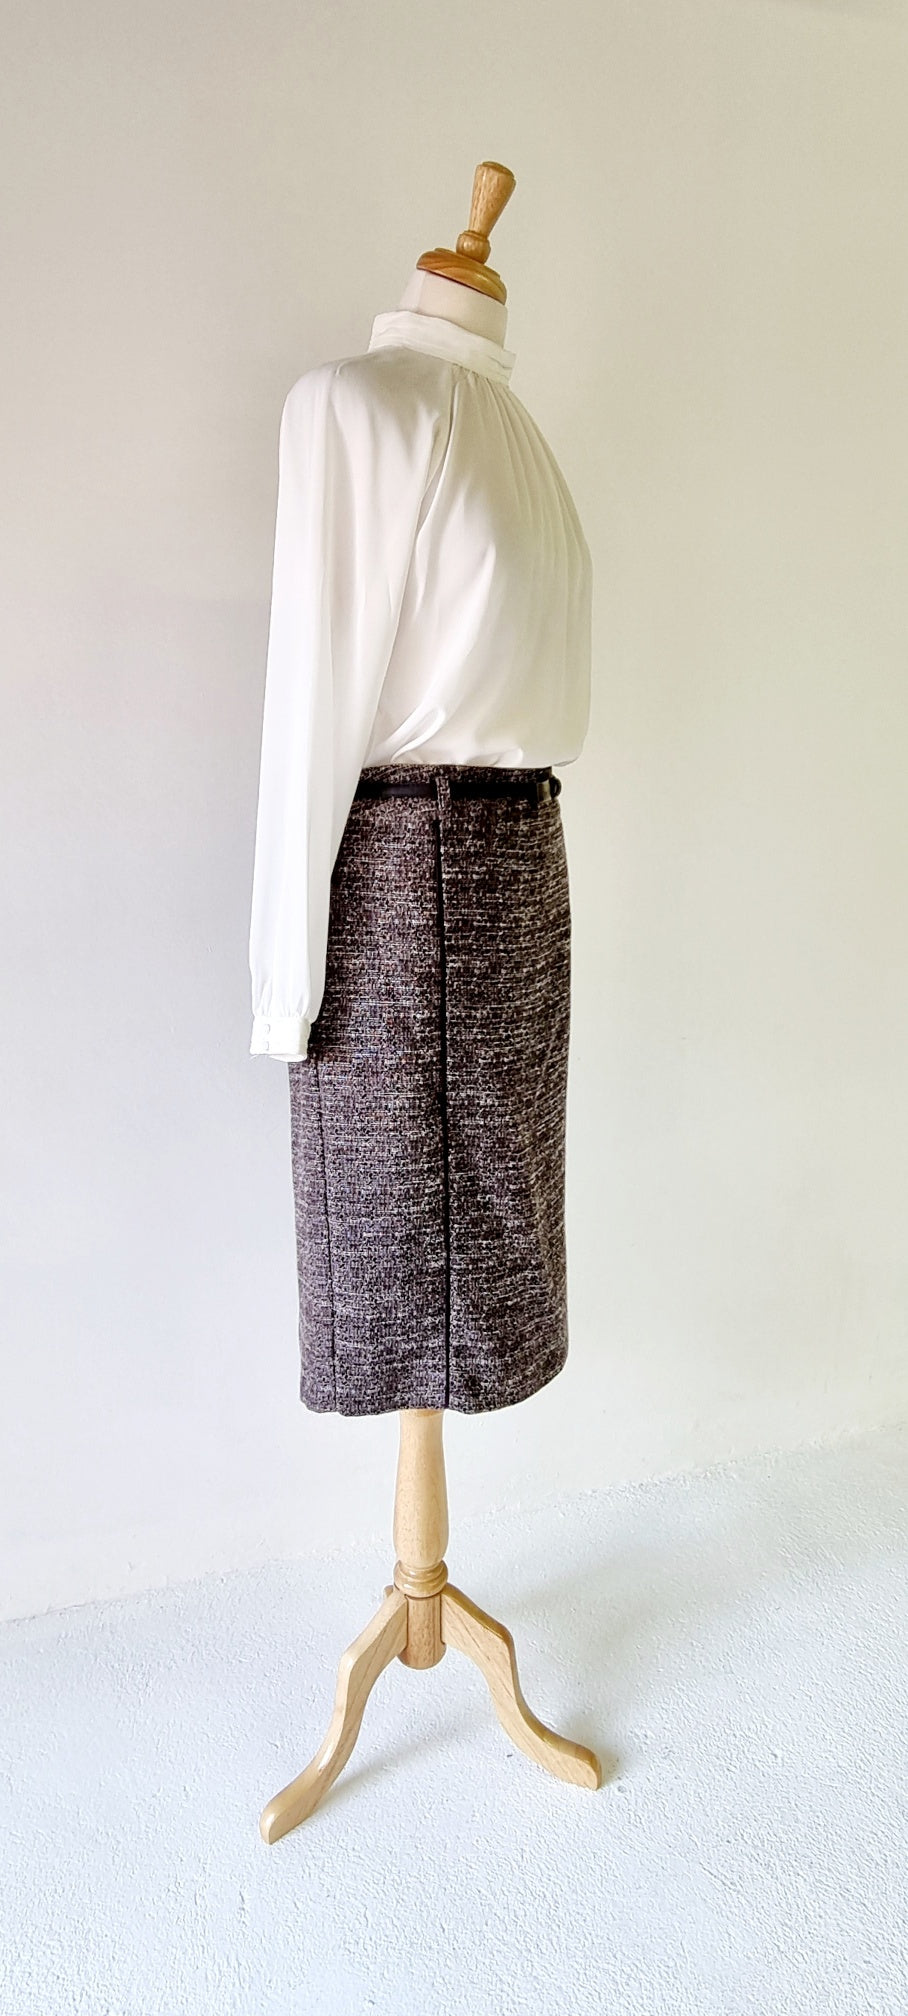 Daniel Hechter Paris - Brown & Beige mottled knee length skirt